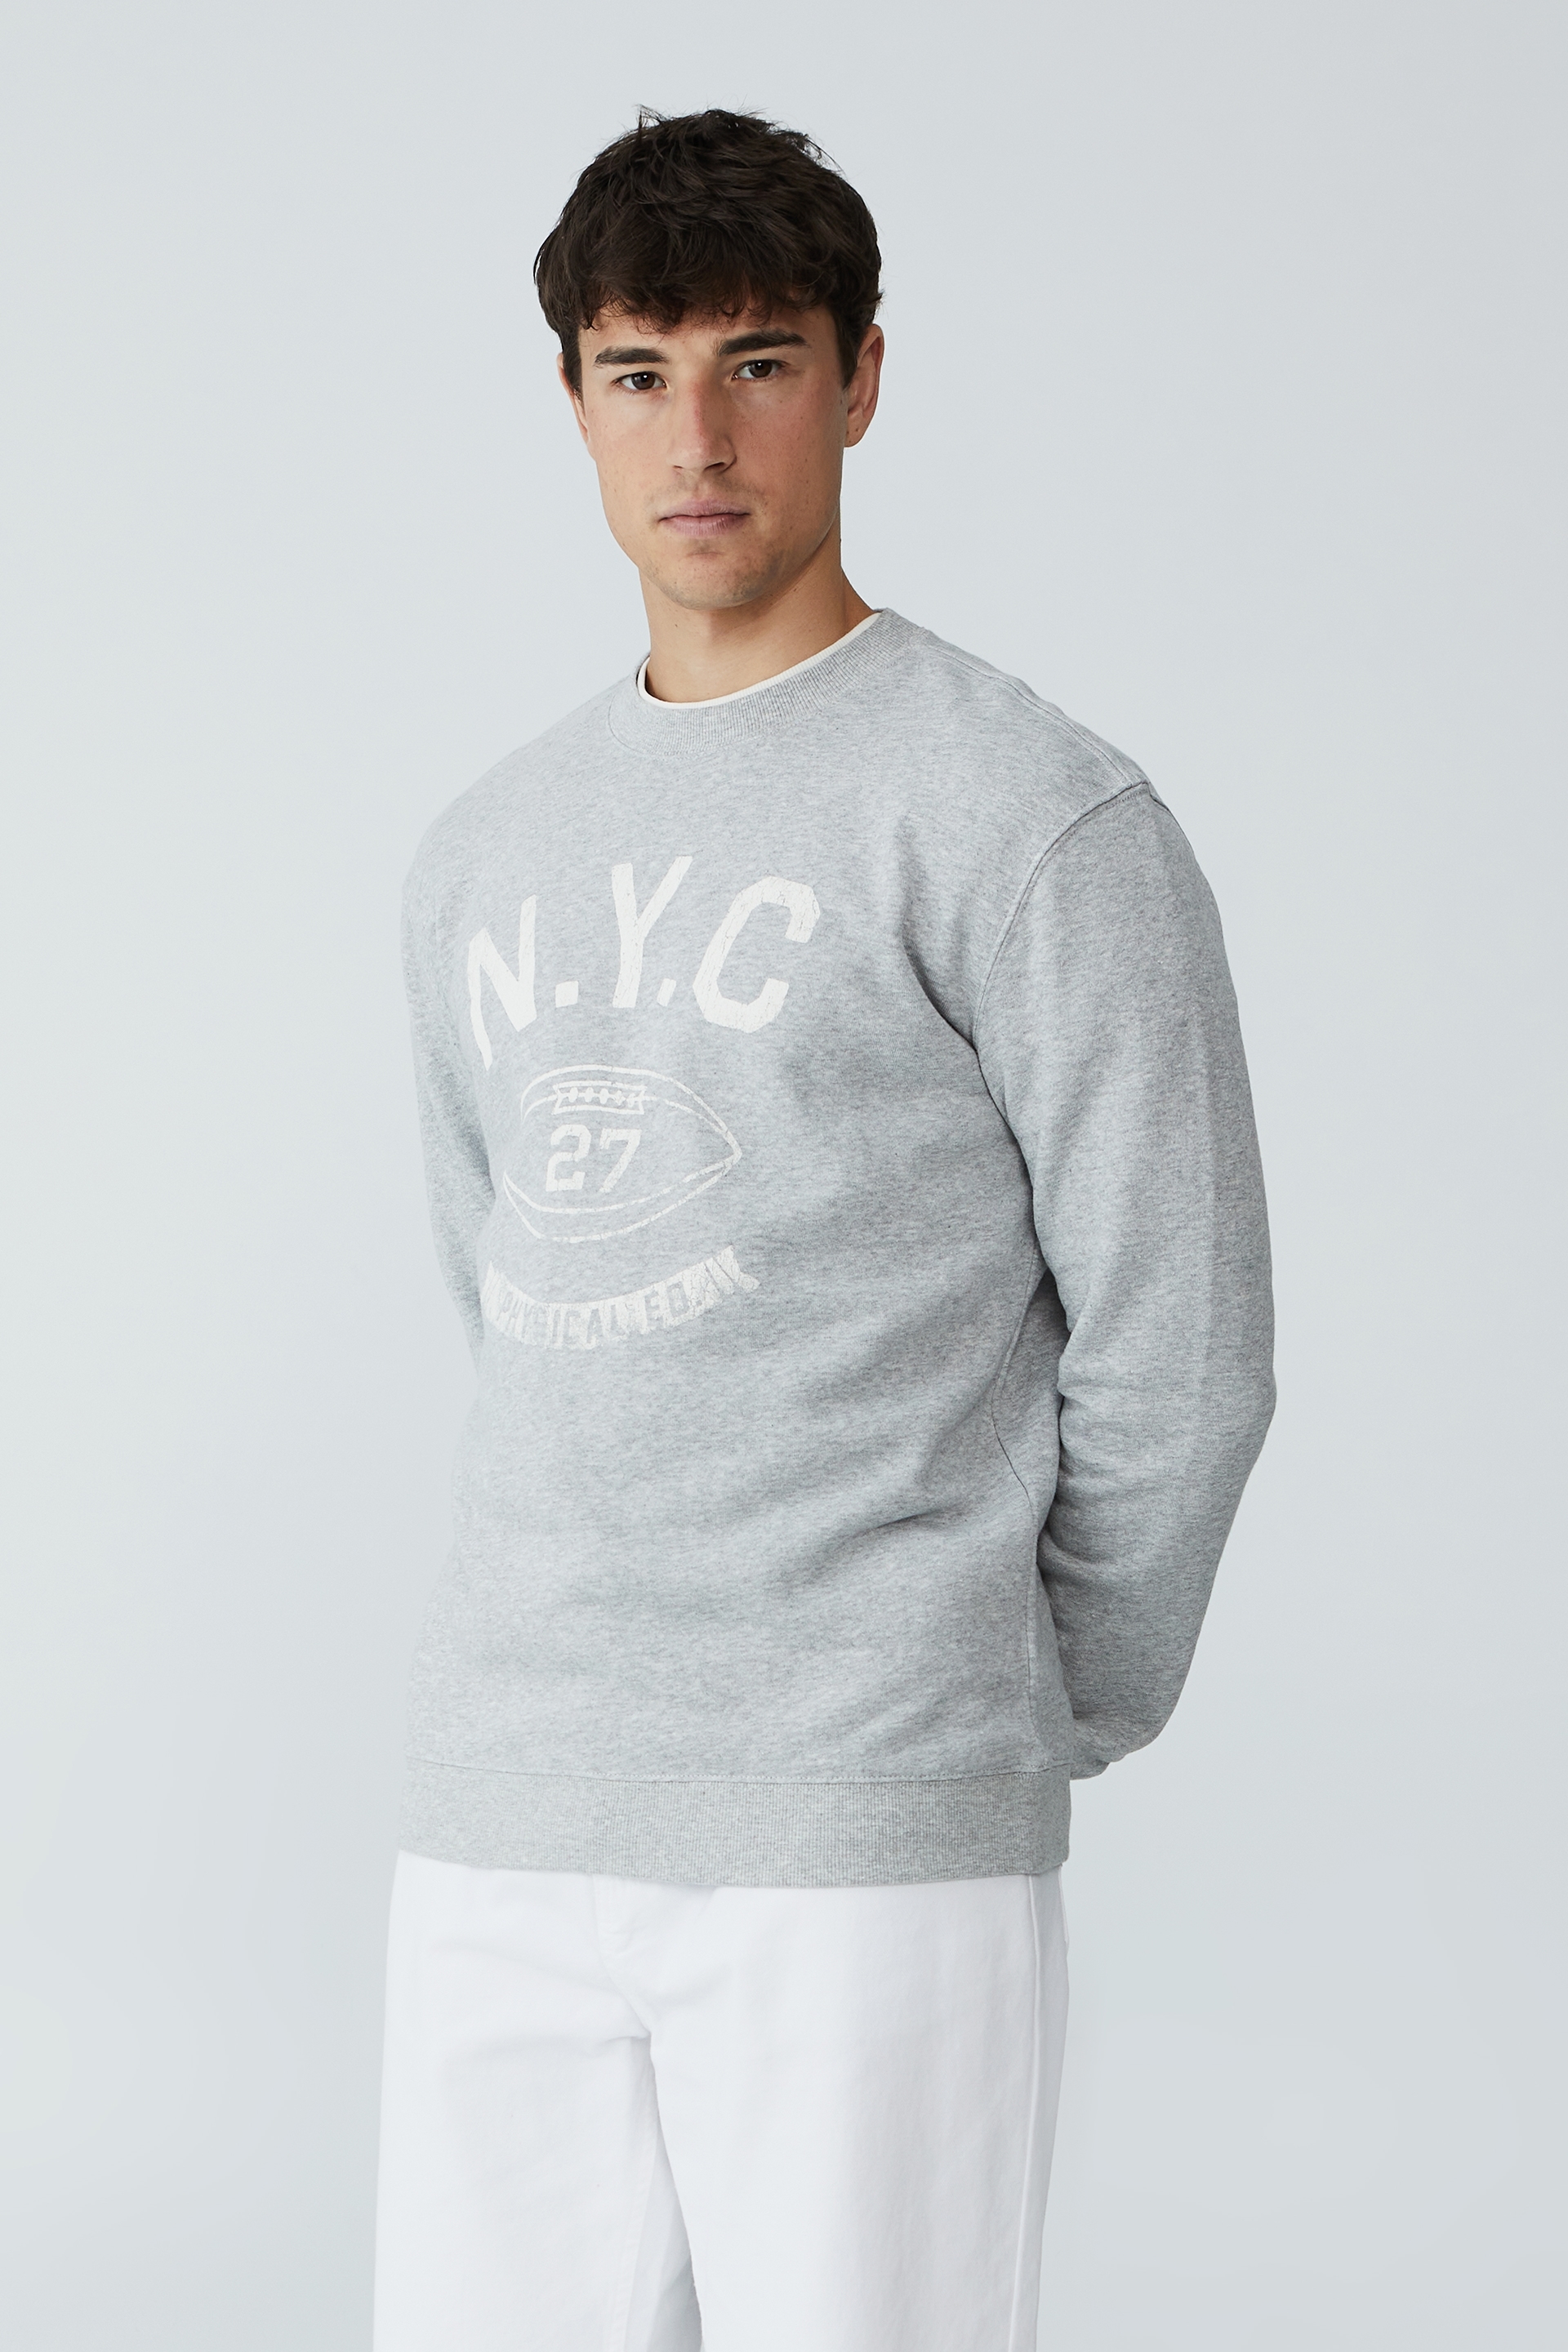 Cotton On Men - Graphic Crew Fleece - Light grey marle/nyc football